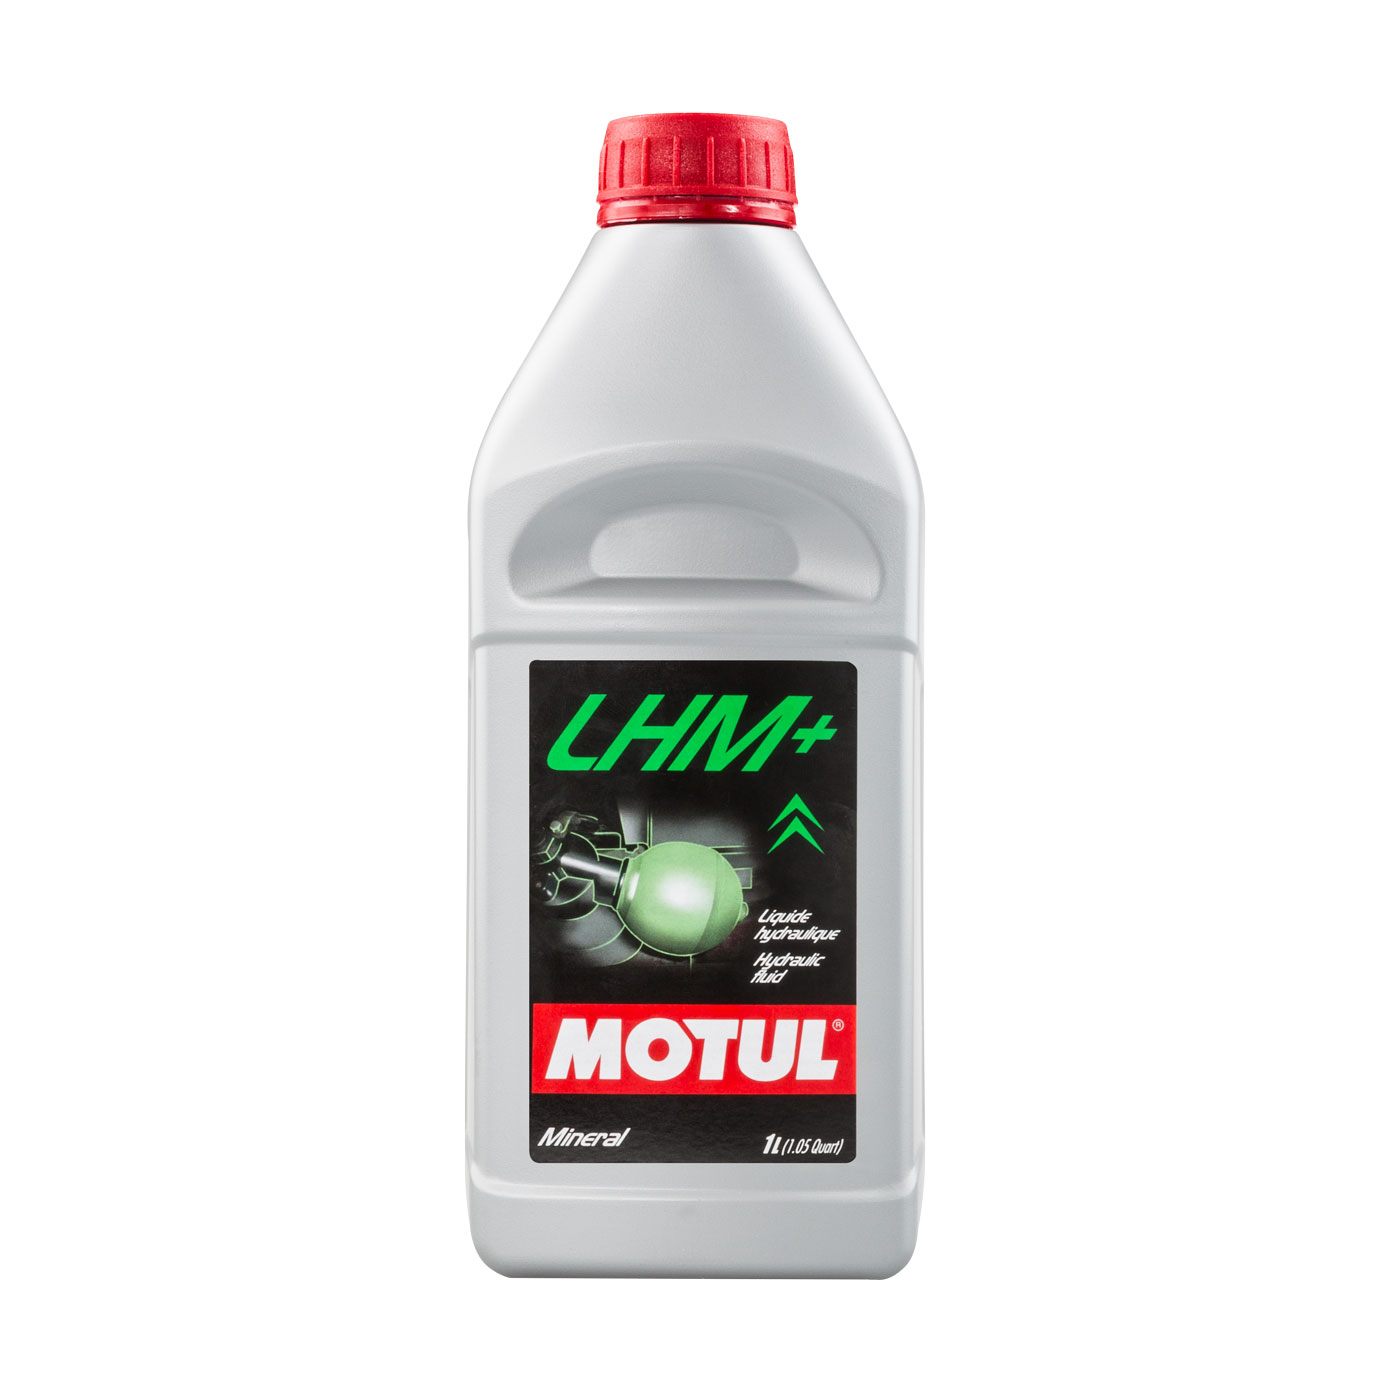 Motul LHM Plus - Citroën Hydraulic Suspension Fluid (1L)